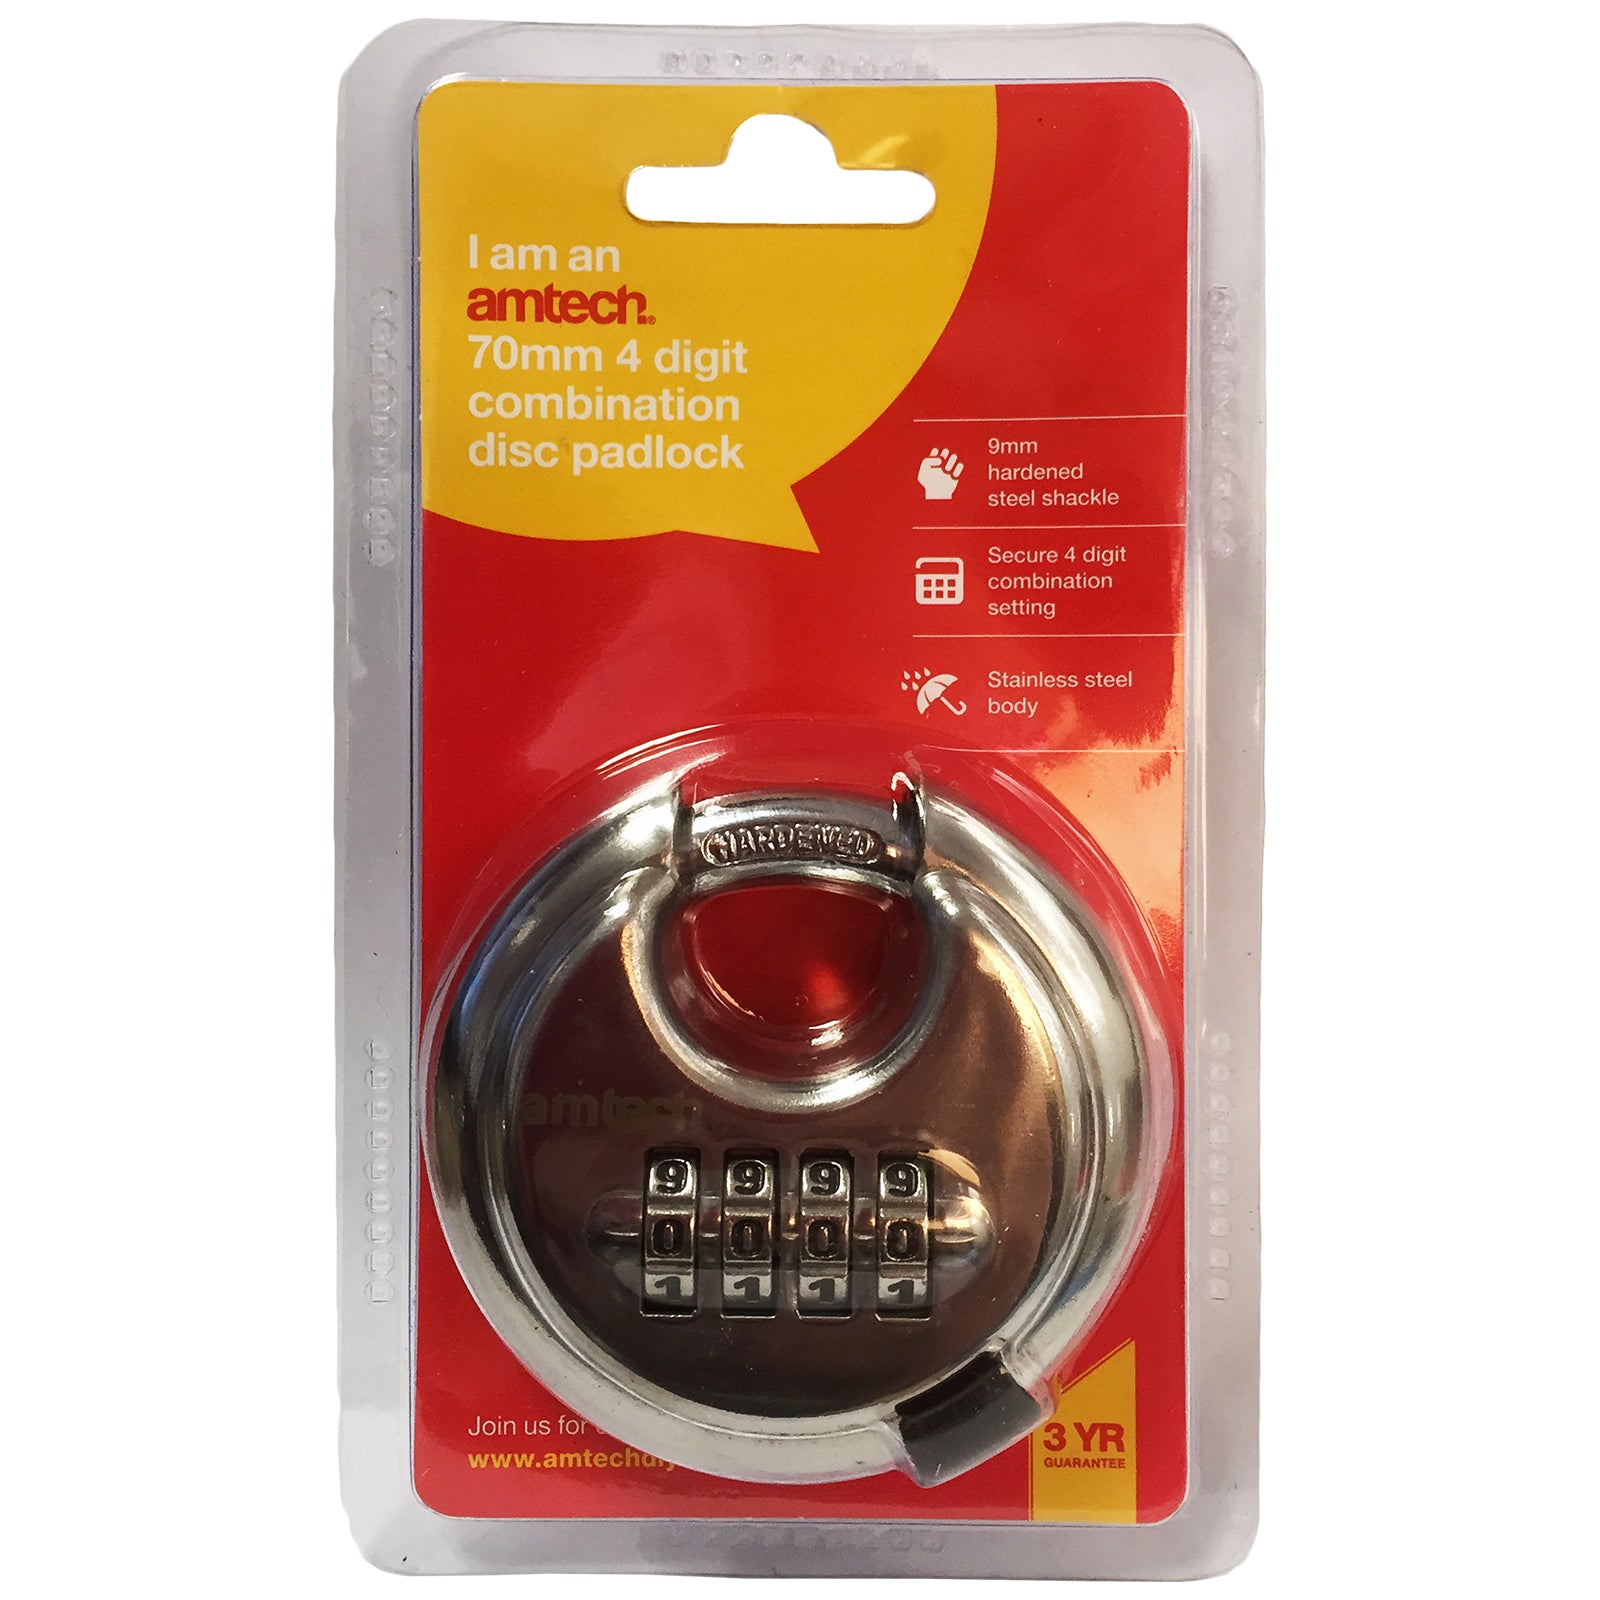 Amtech 70mm 4 Digit Combination Security Disc Padlock